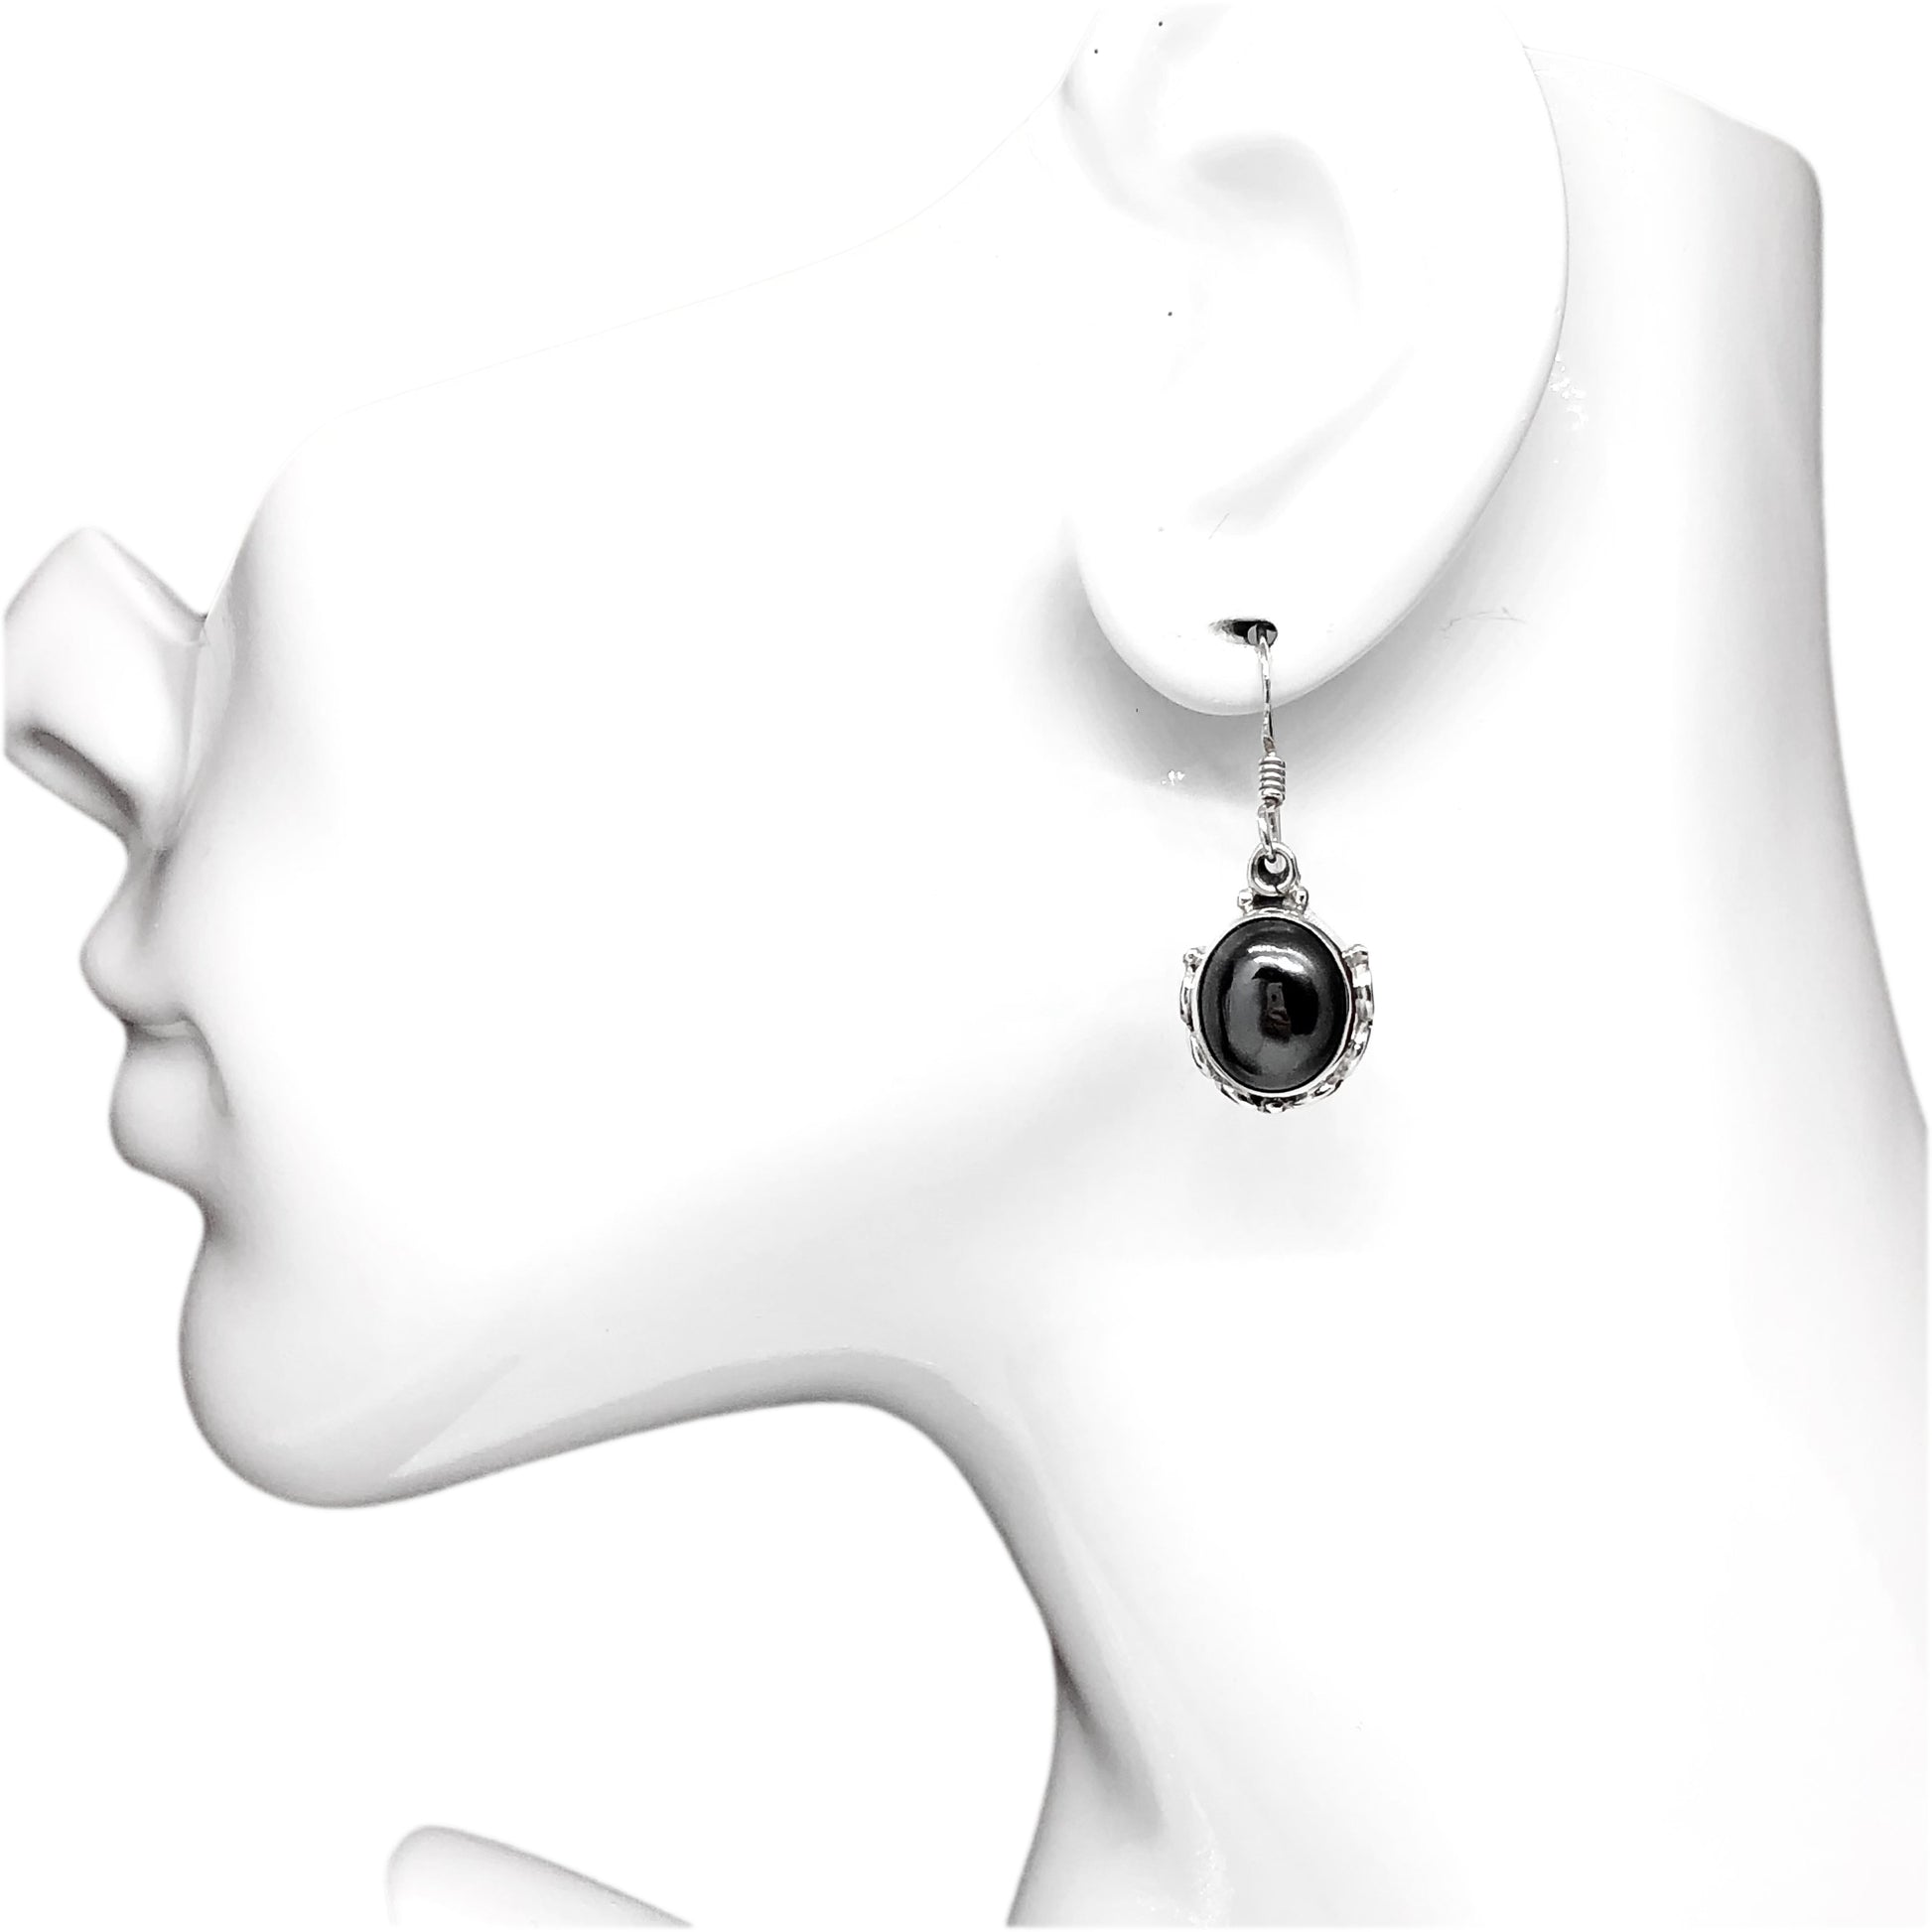 Jewelry - 925 Sterling Silver Black Metallic Sheen Hematite Stone Dangle Earrings | Blingschlingers.com USA